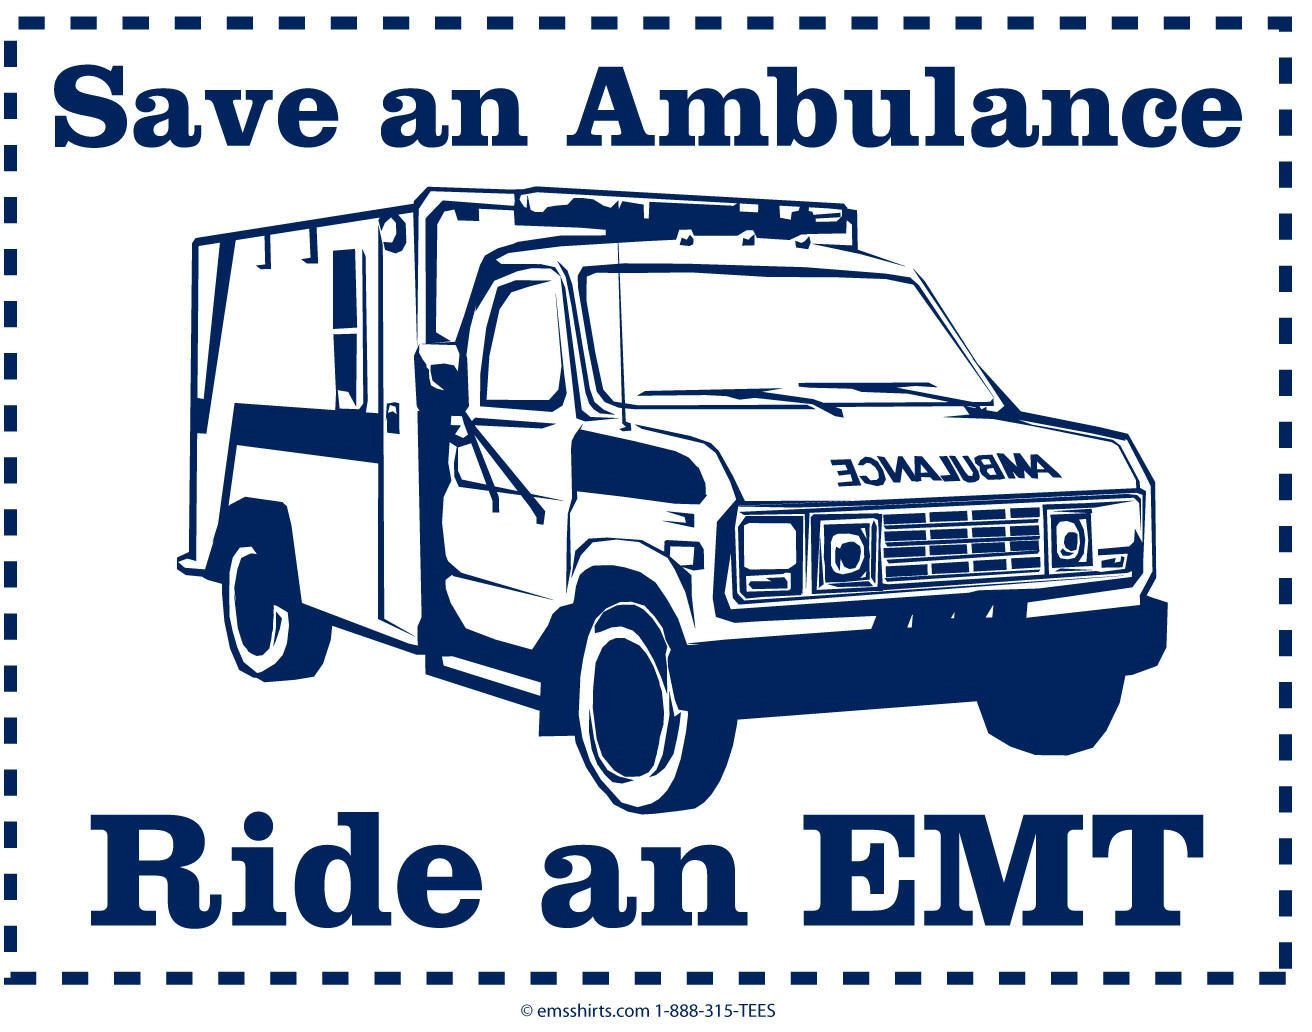 TOP-10 EMT Humor Accounts: Laugh a little more